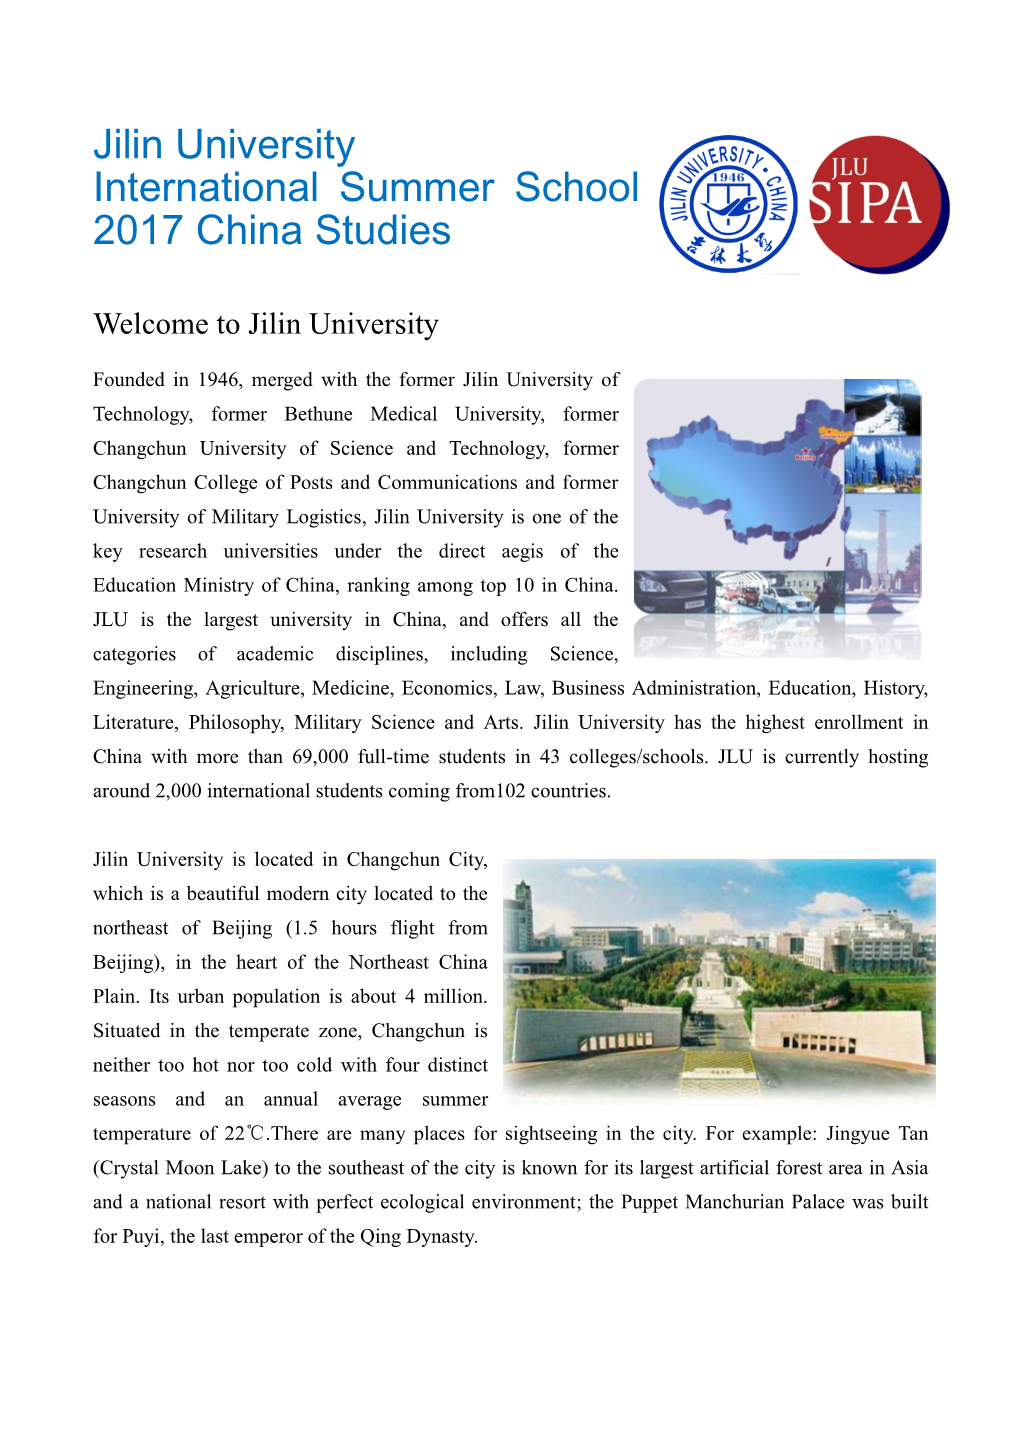 Jilin University International Summer School 2017 China Studies